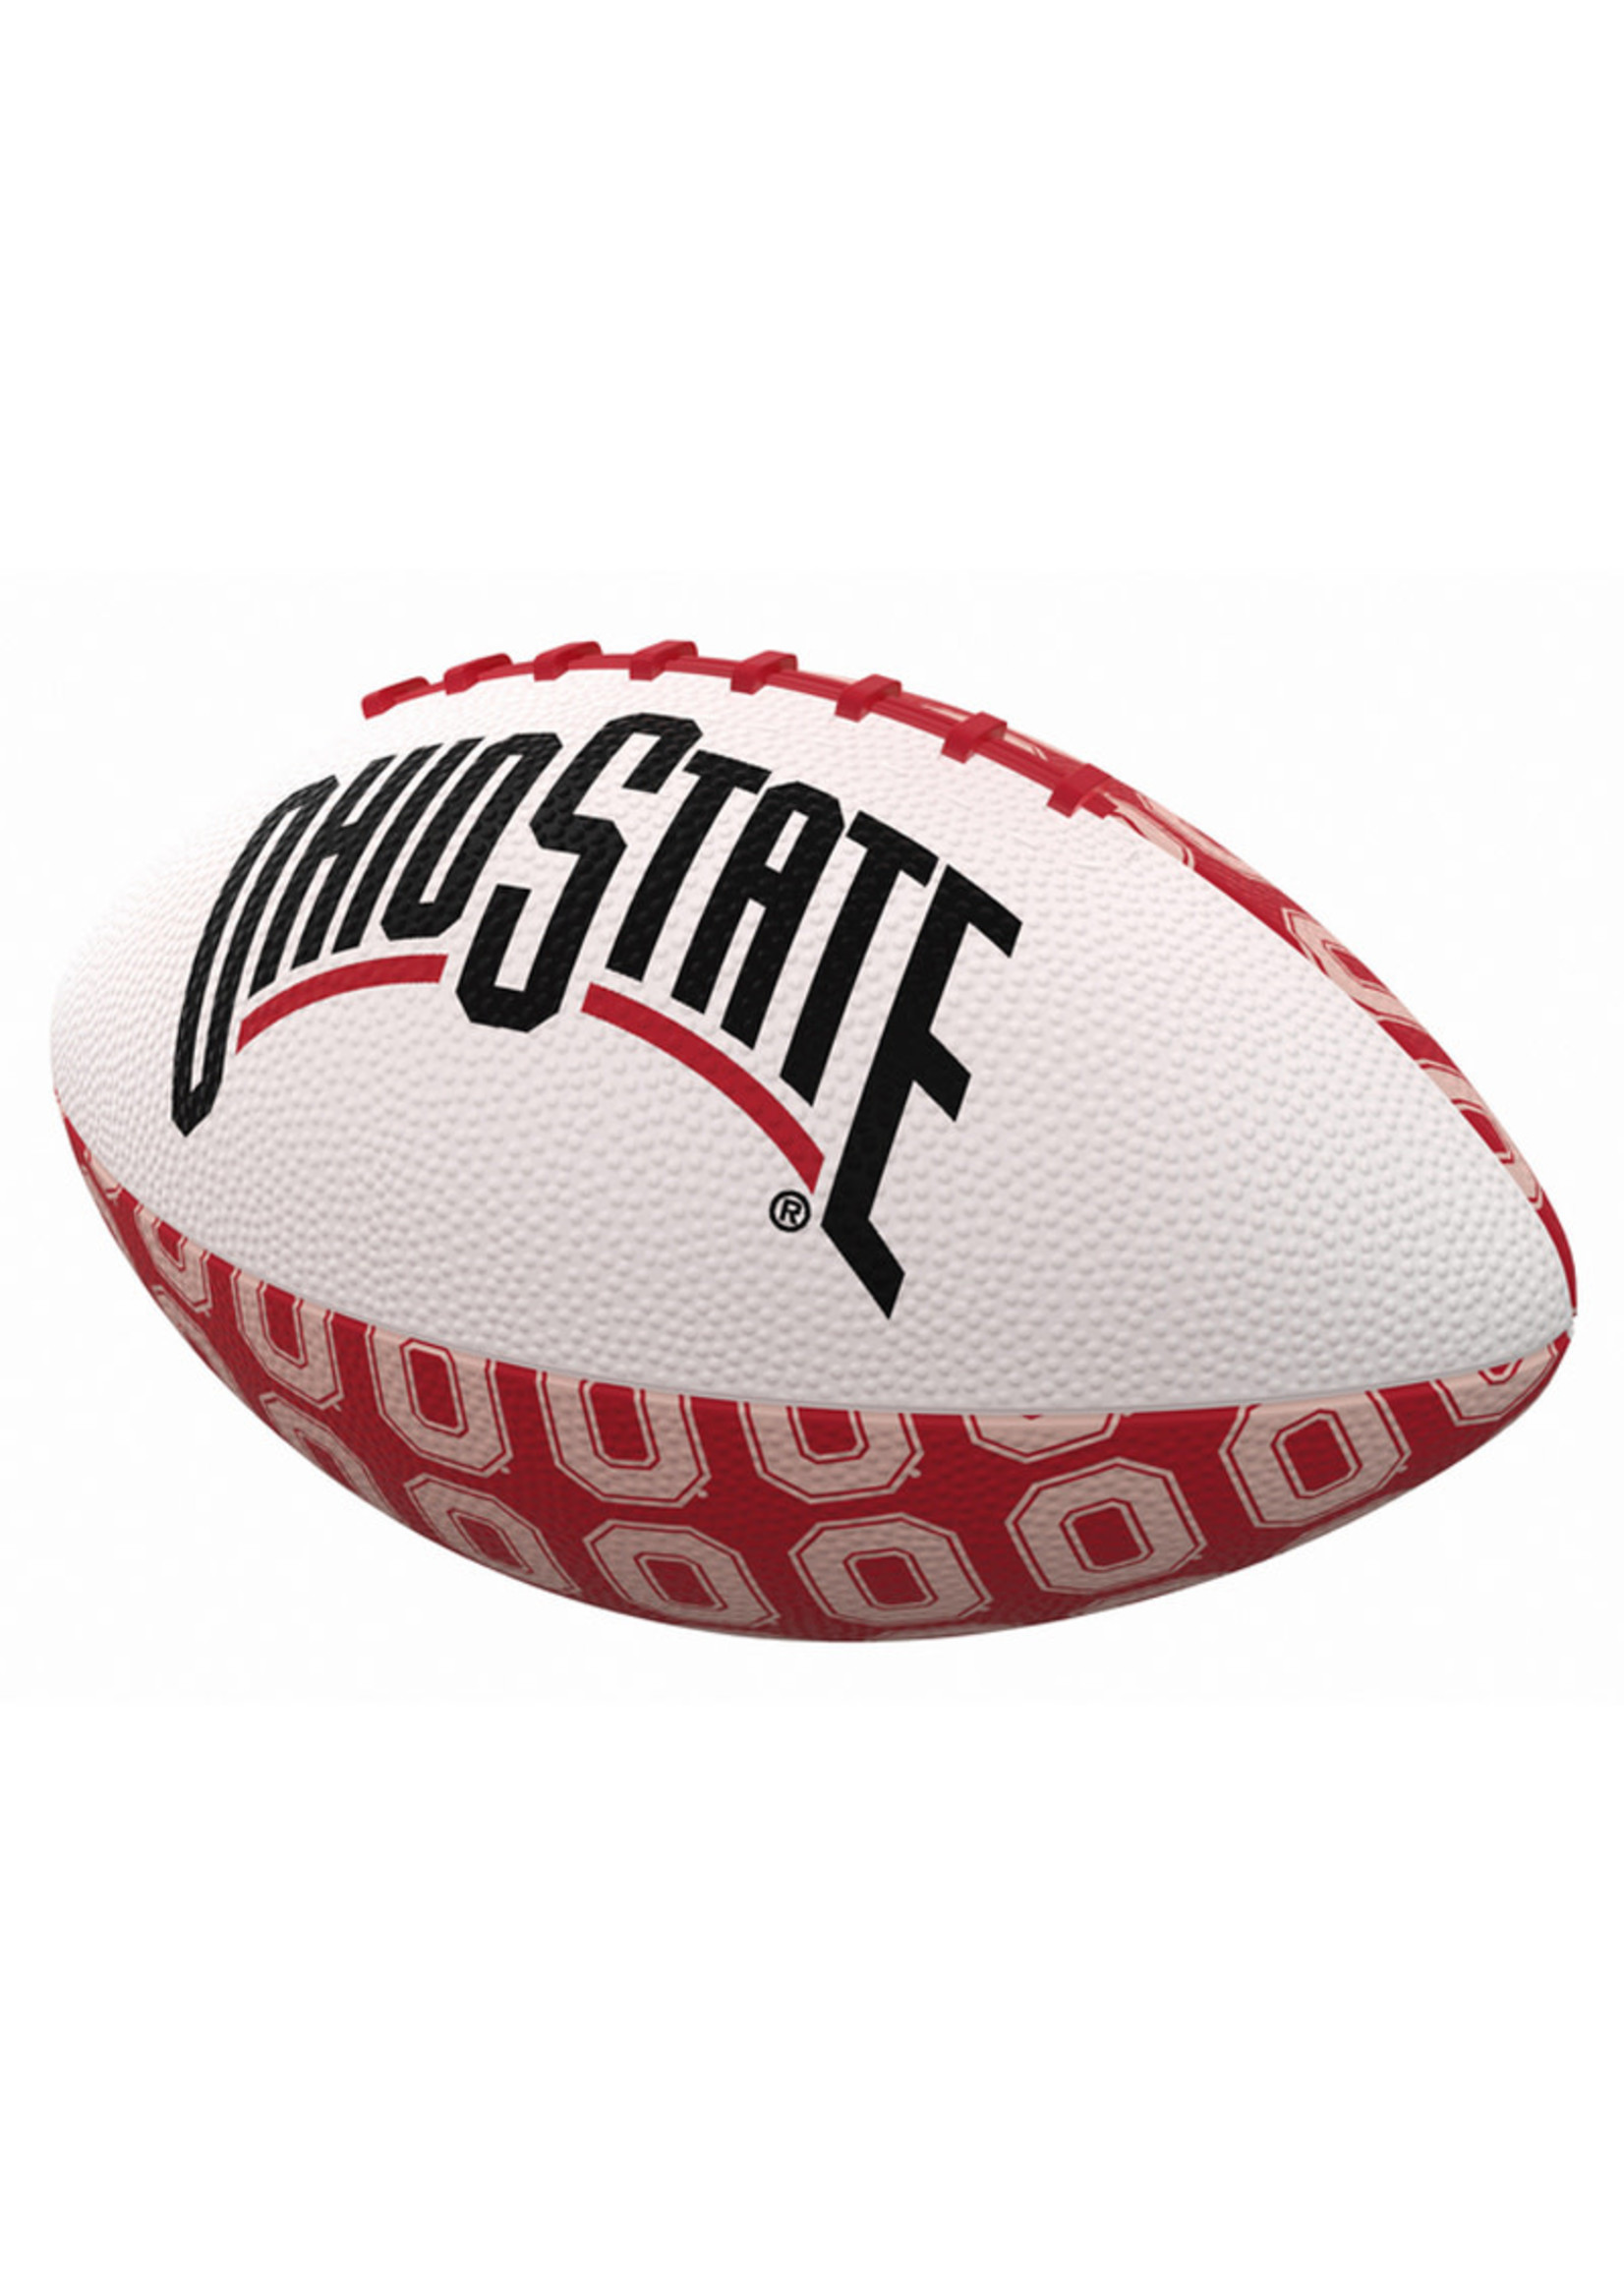 Ohio State Repeating Mini-Size Rubber Football